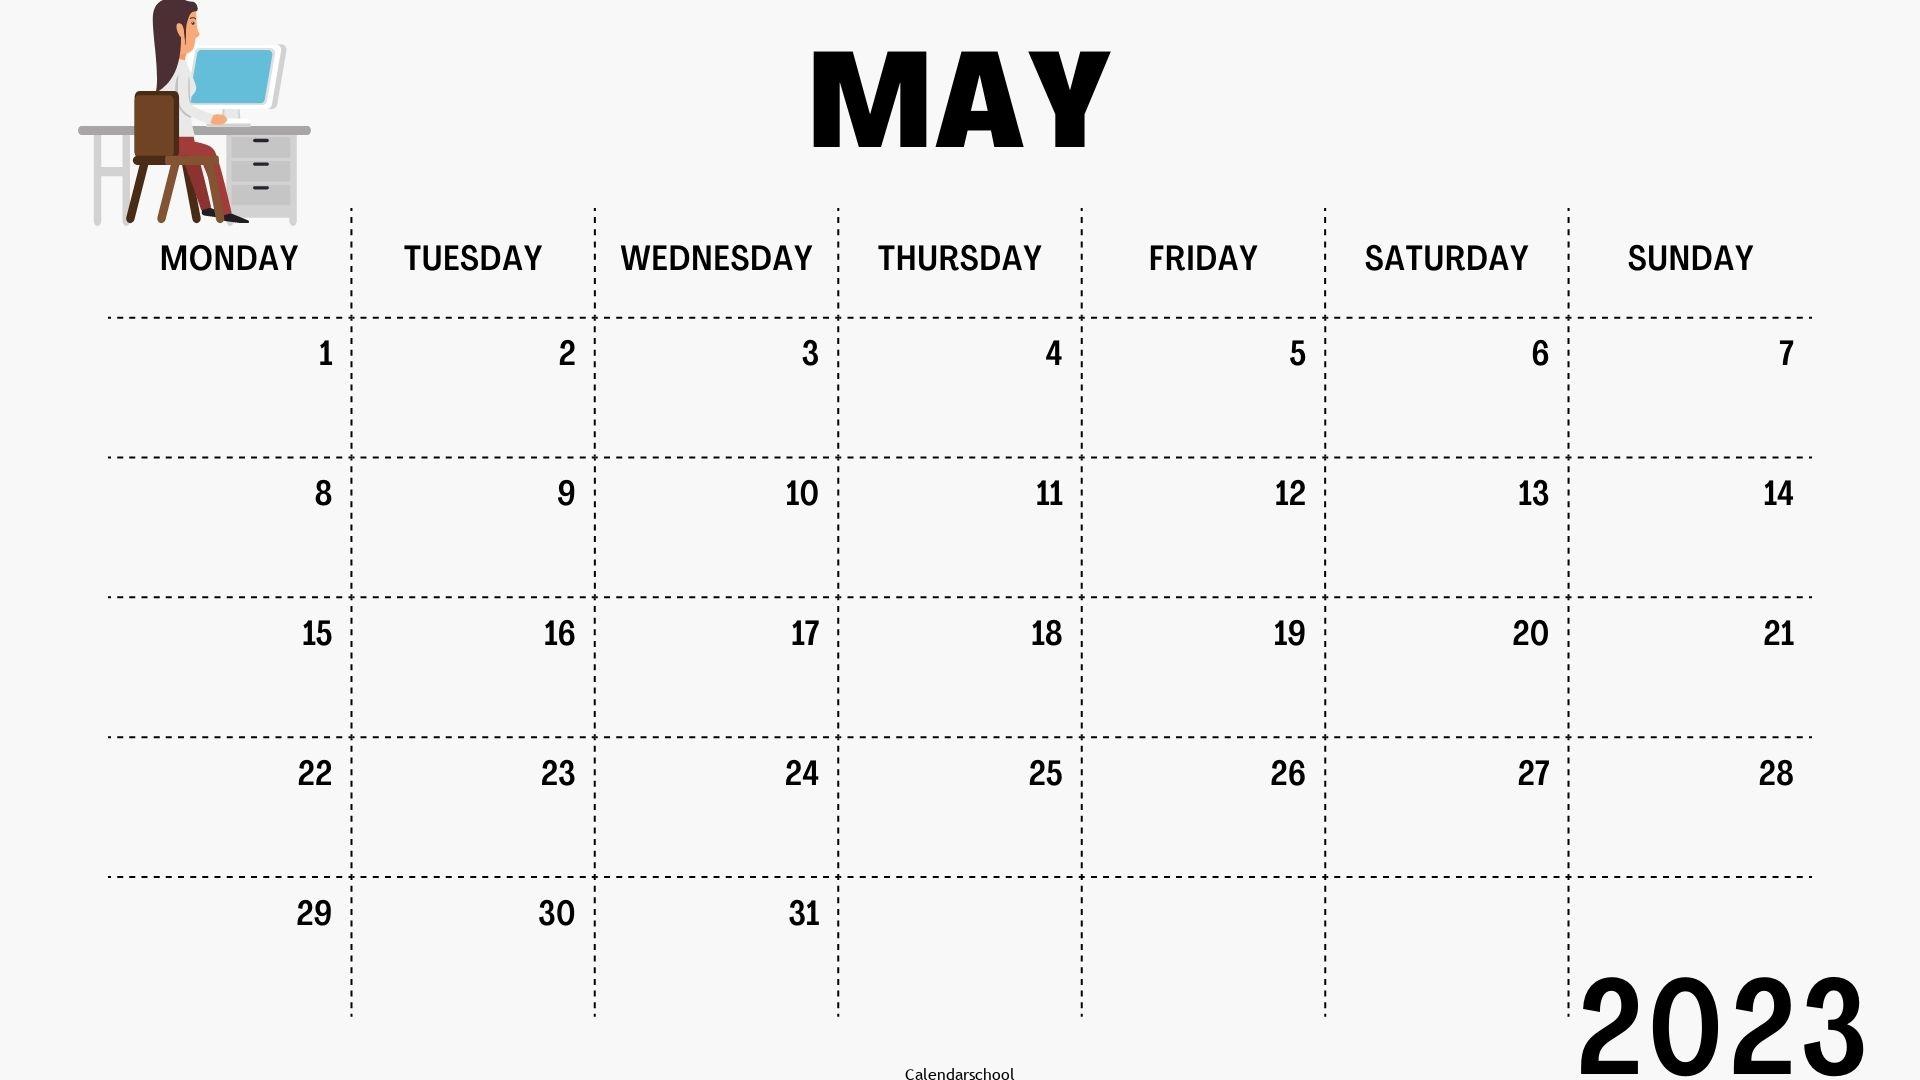 2023 May June Calendar